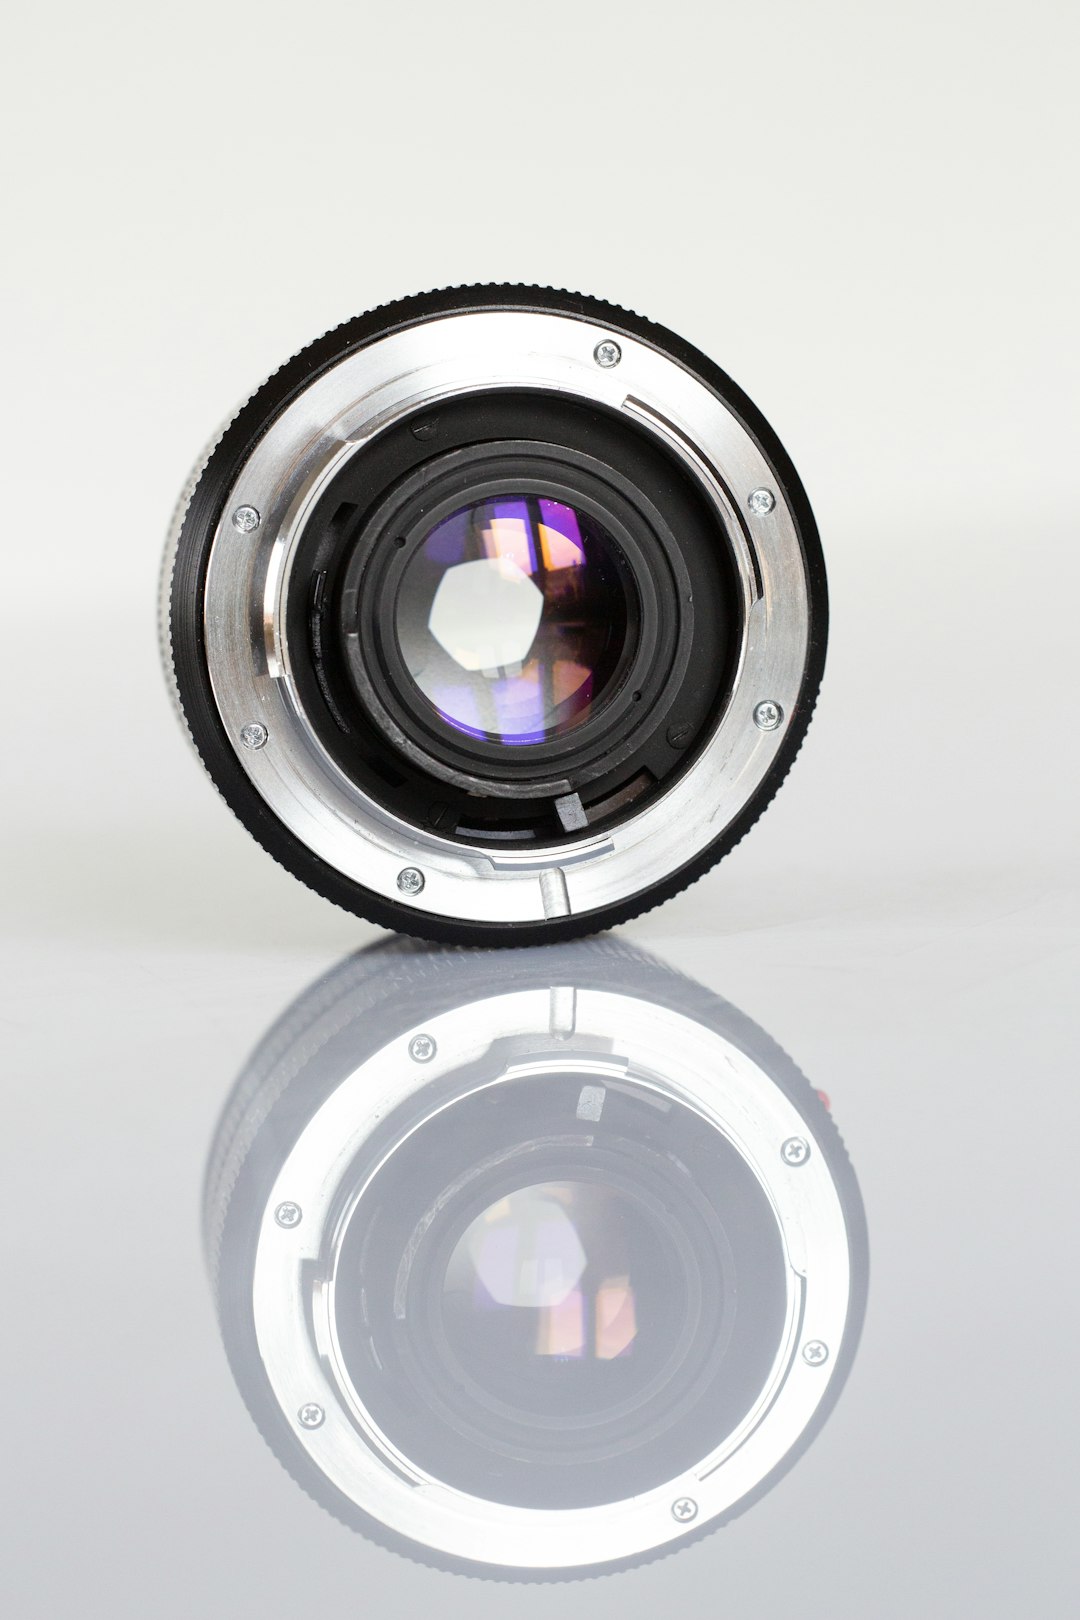 gray and black camera lens